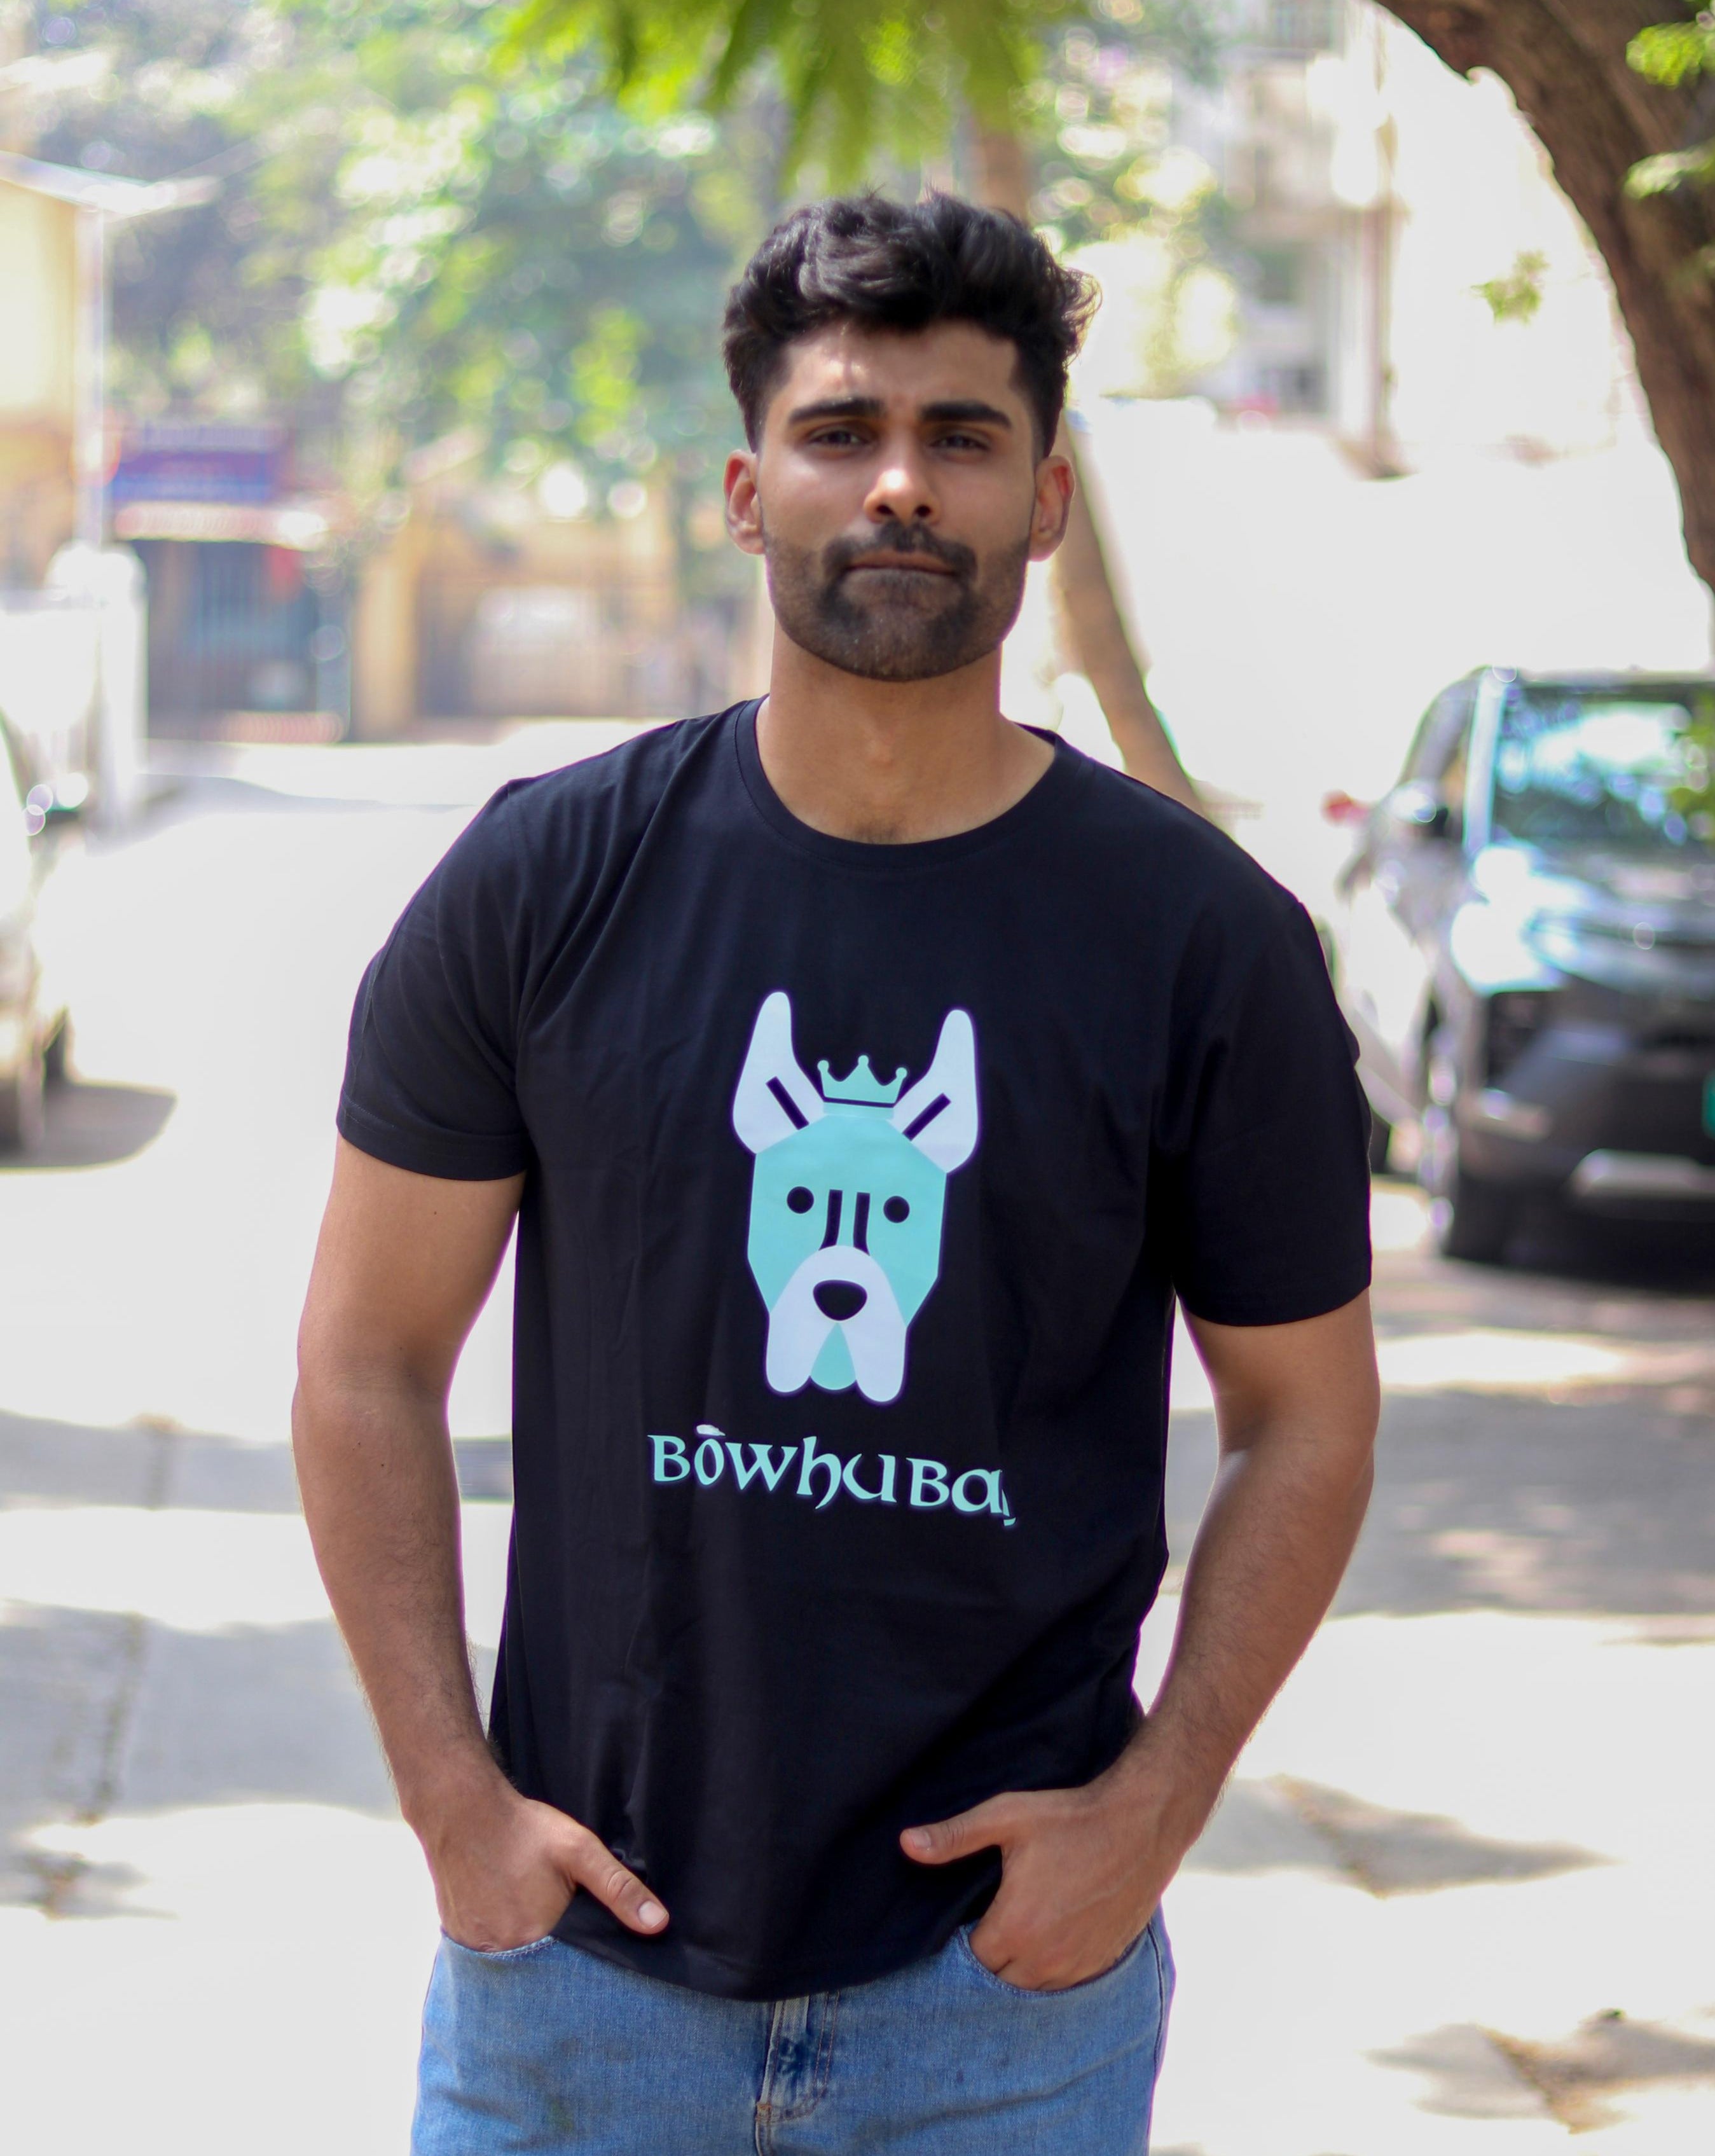 Bowhubali T-Shirt- UNISEX